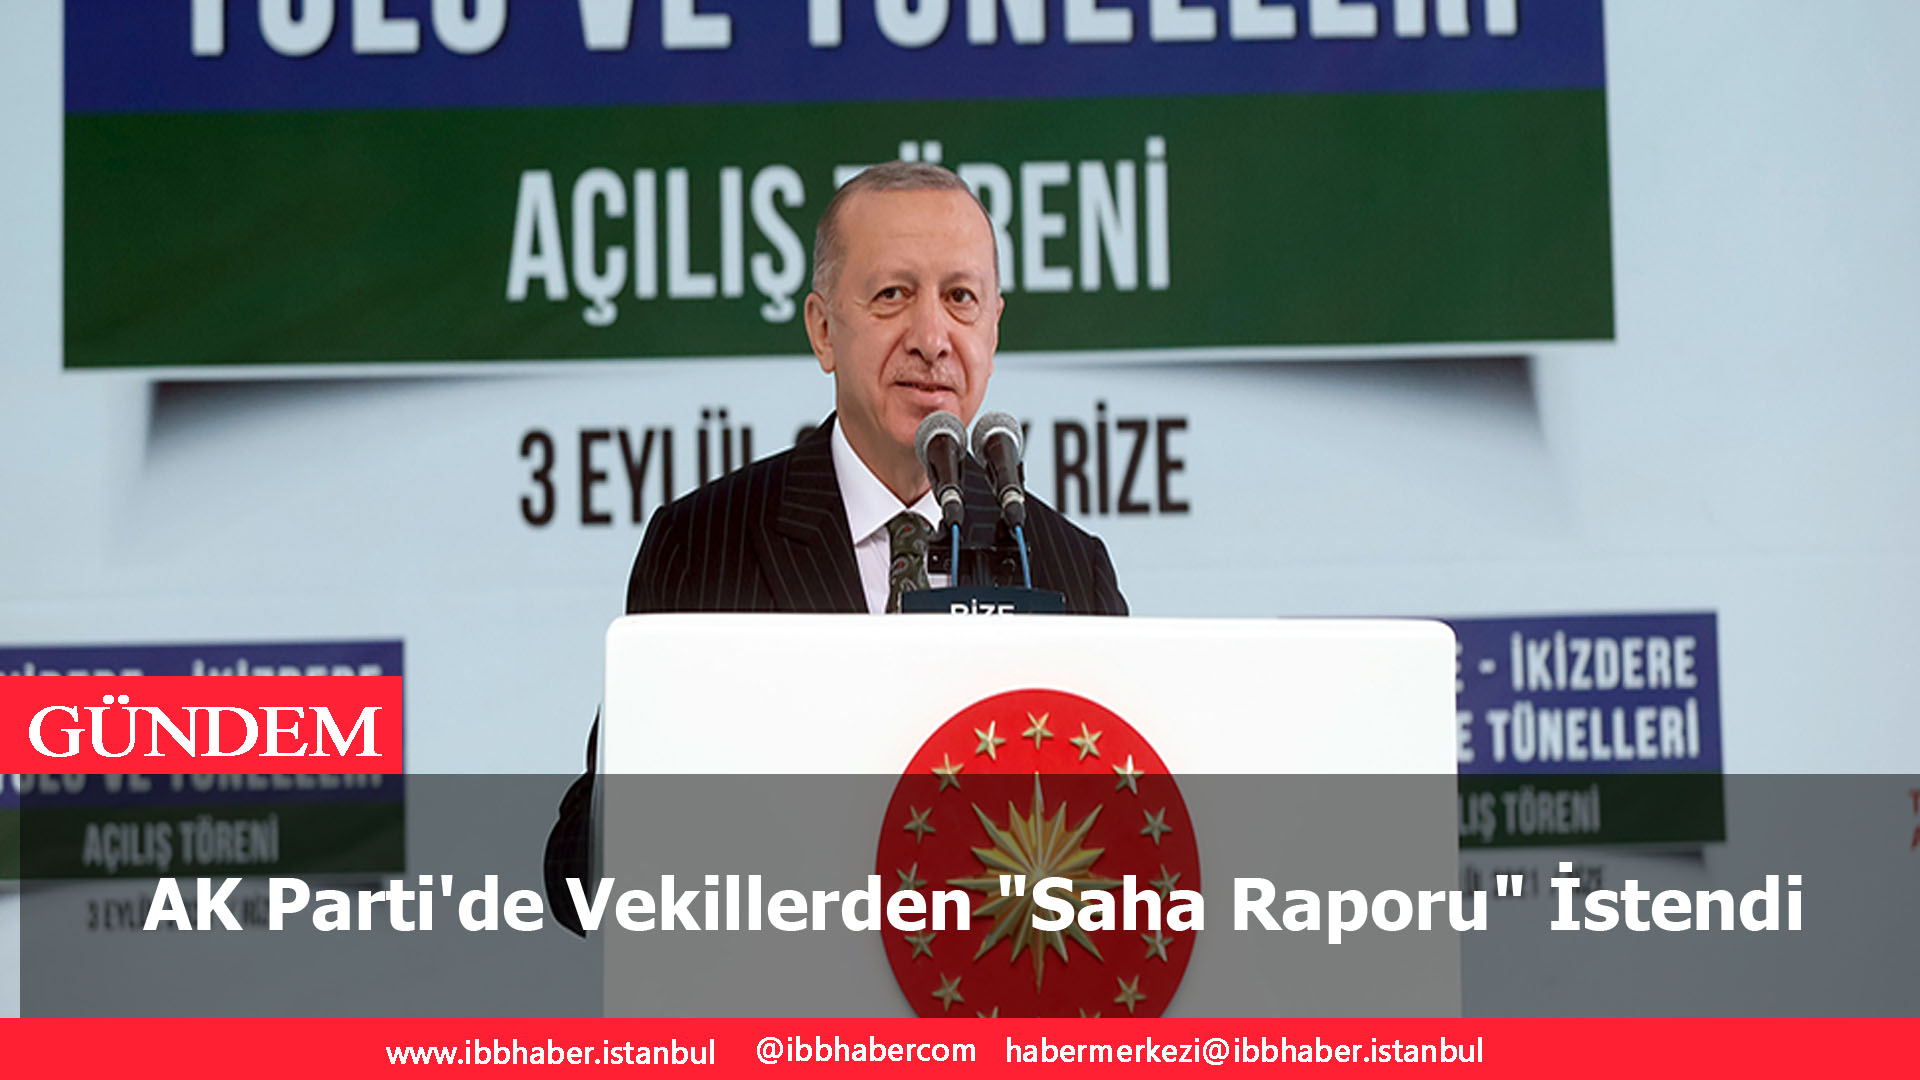 AK Parti ‘de Vekillerden “Saha Raporu” İstendi